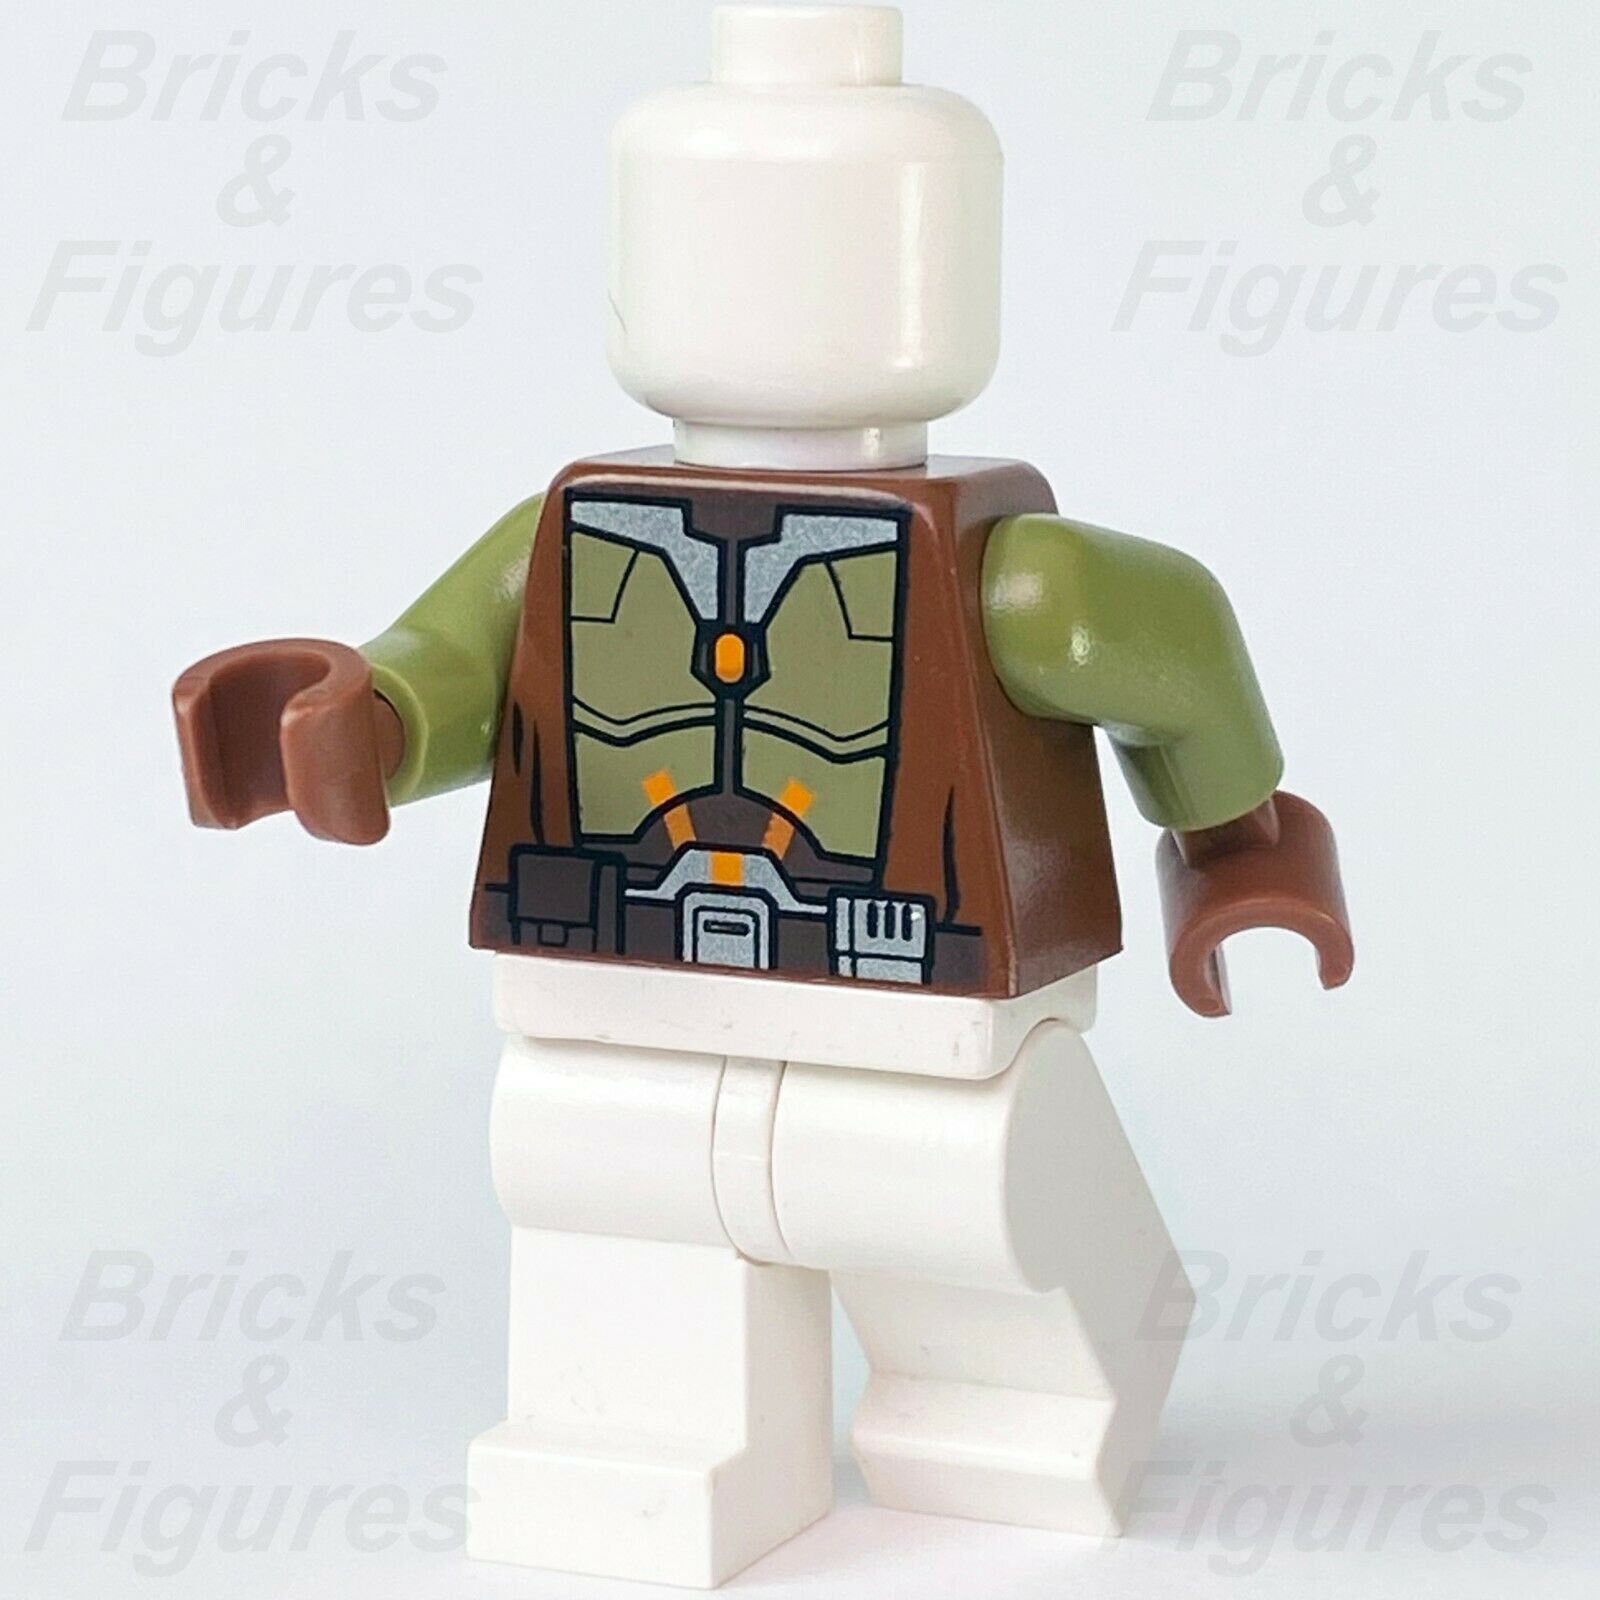 New Star Wars LEGO Jedi Knight (Armor & Robe) Body Torso Minifigure Part 75025 - Bricks & Figures